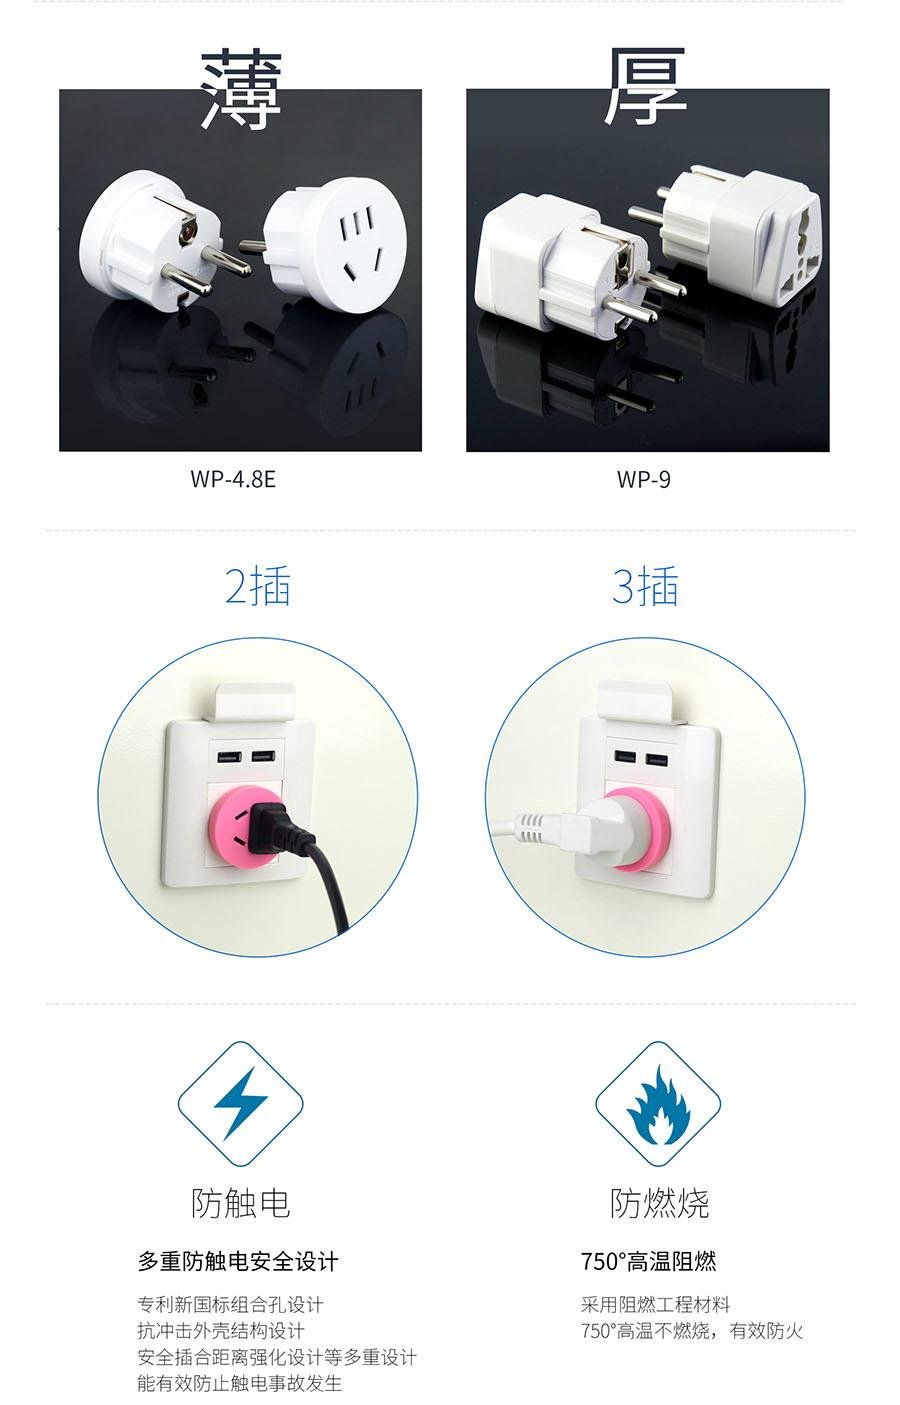 WP-4.8E China to Europe/Korea travel adapter plug  2